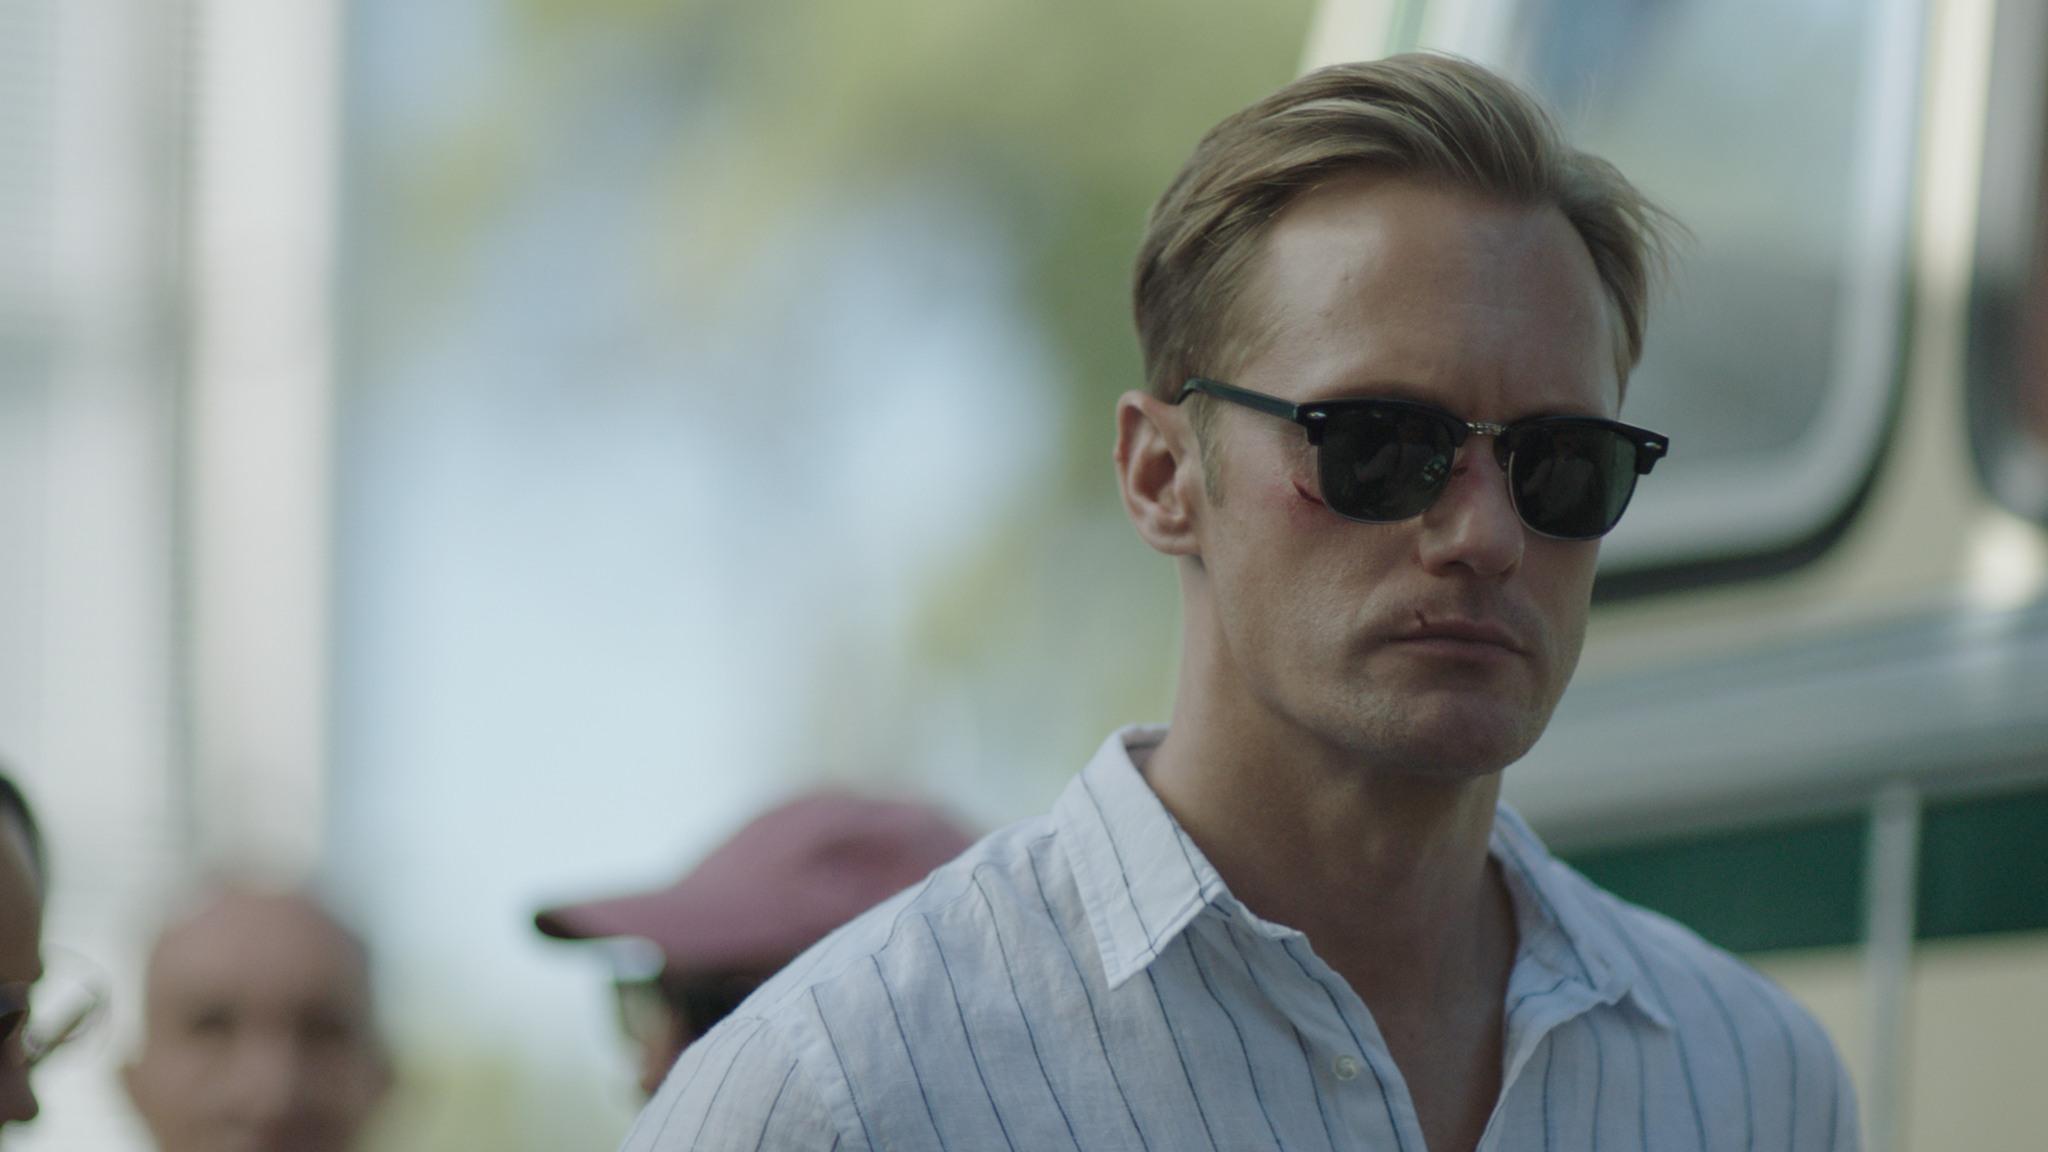 Still from the film 'Infinity Pool' showing Alexander Skarsgård wearing sunglasses.